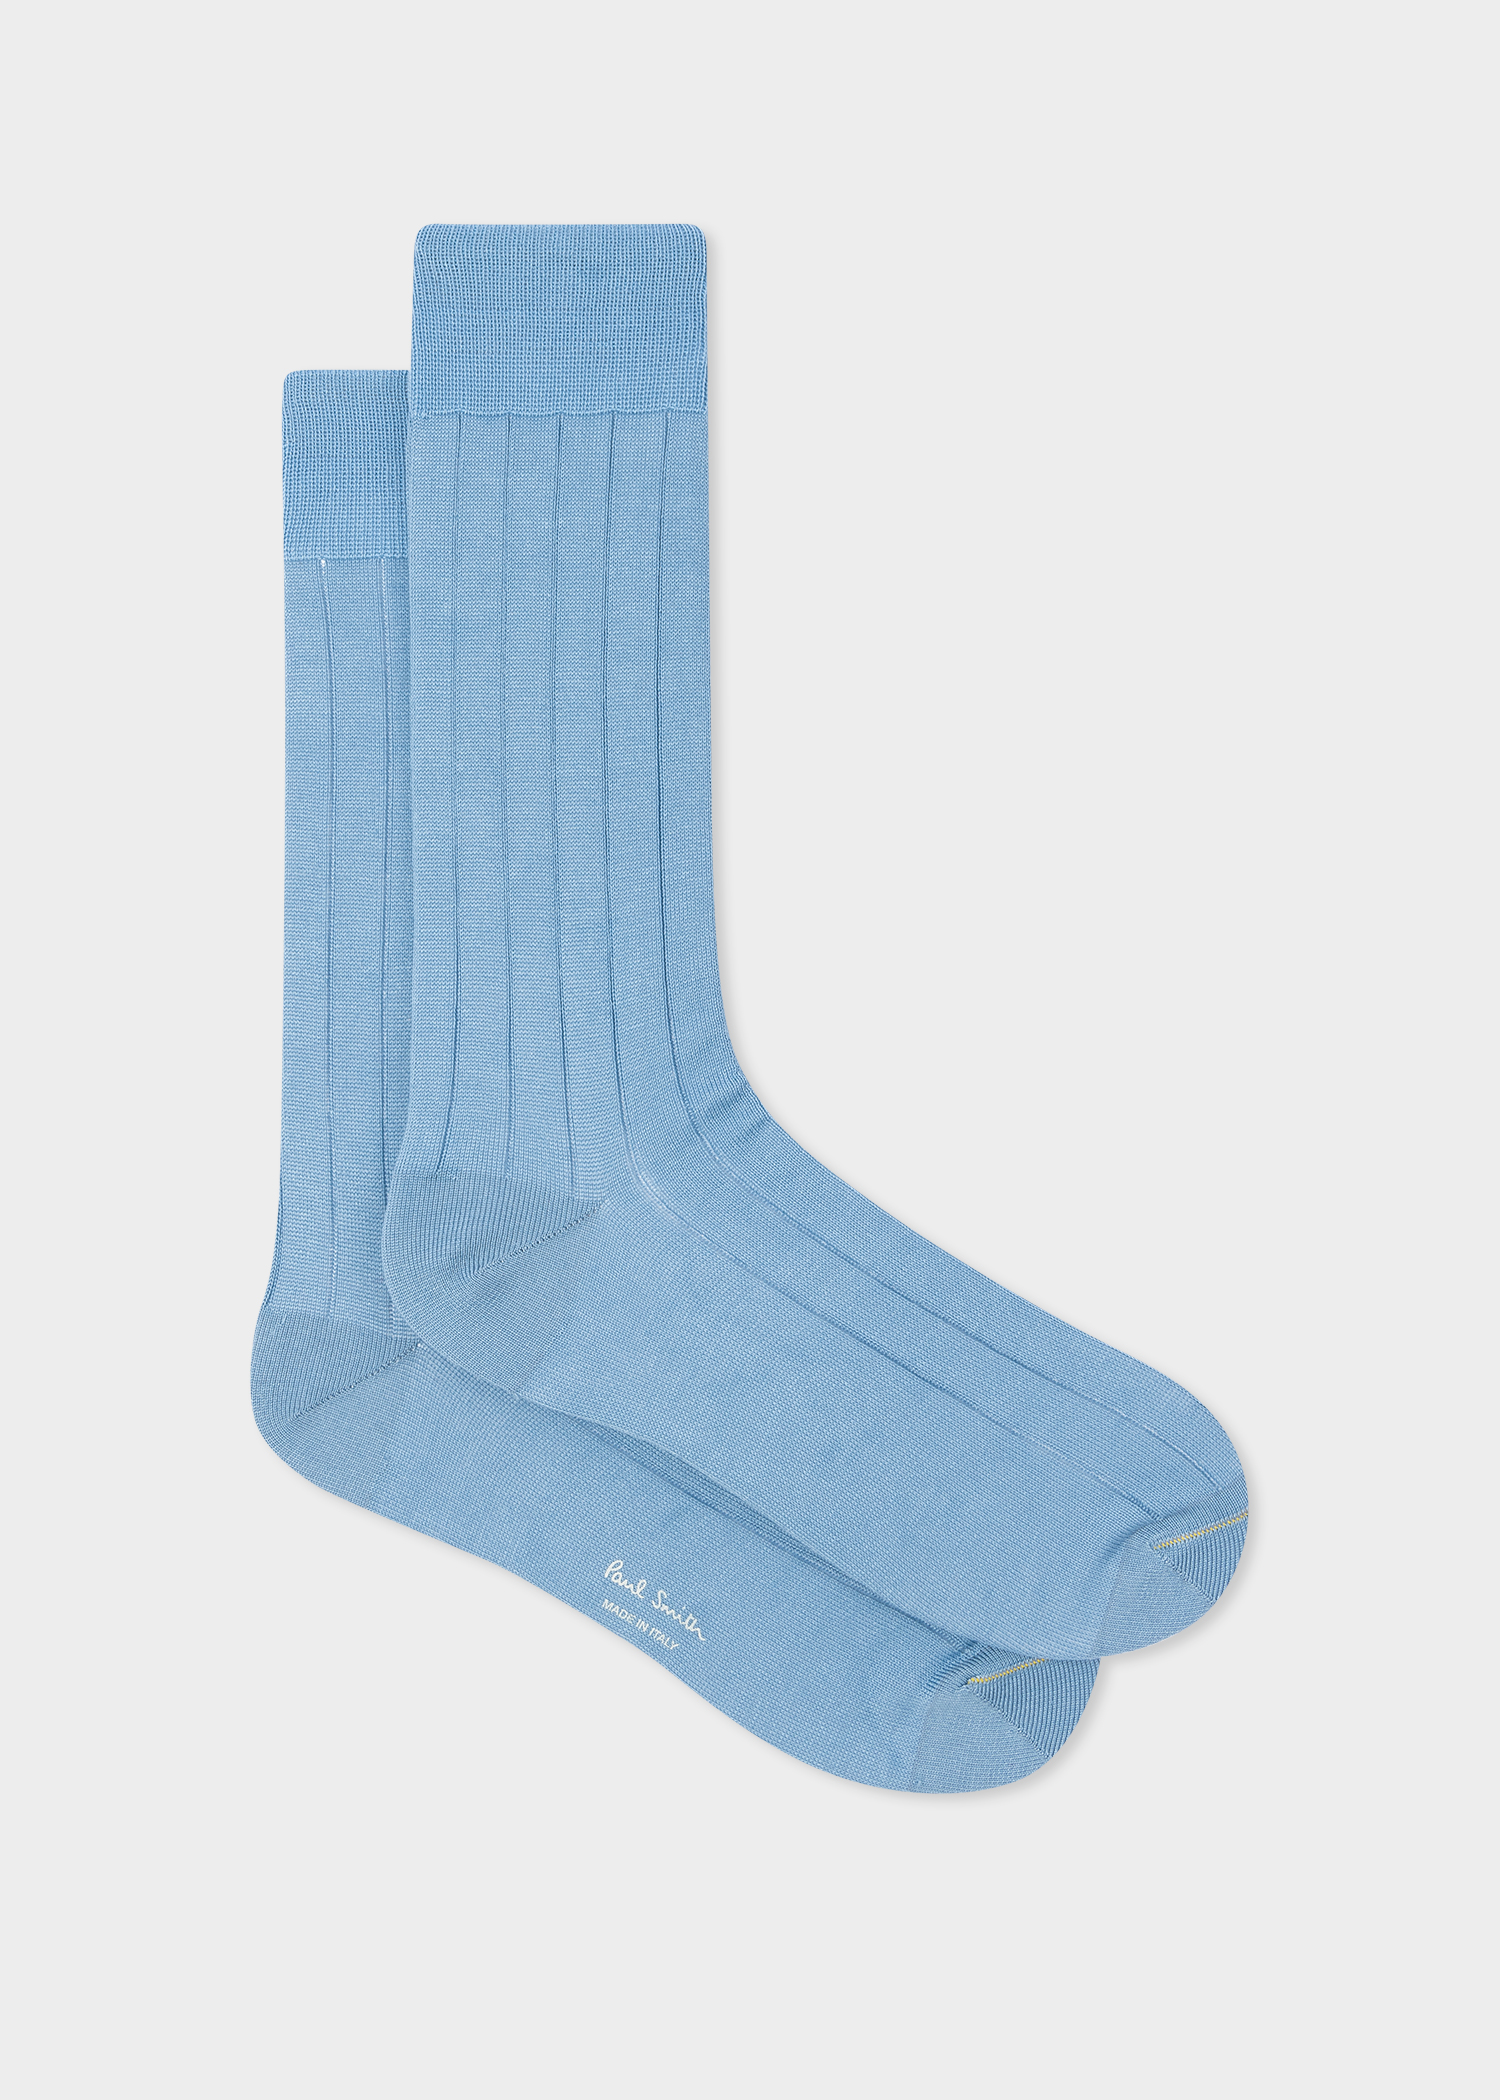 Men's Pale Blue Cotton-Blend Ribbed Socks